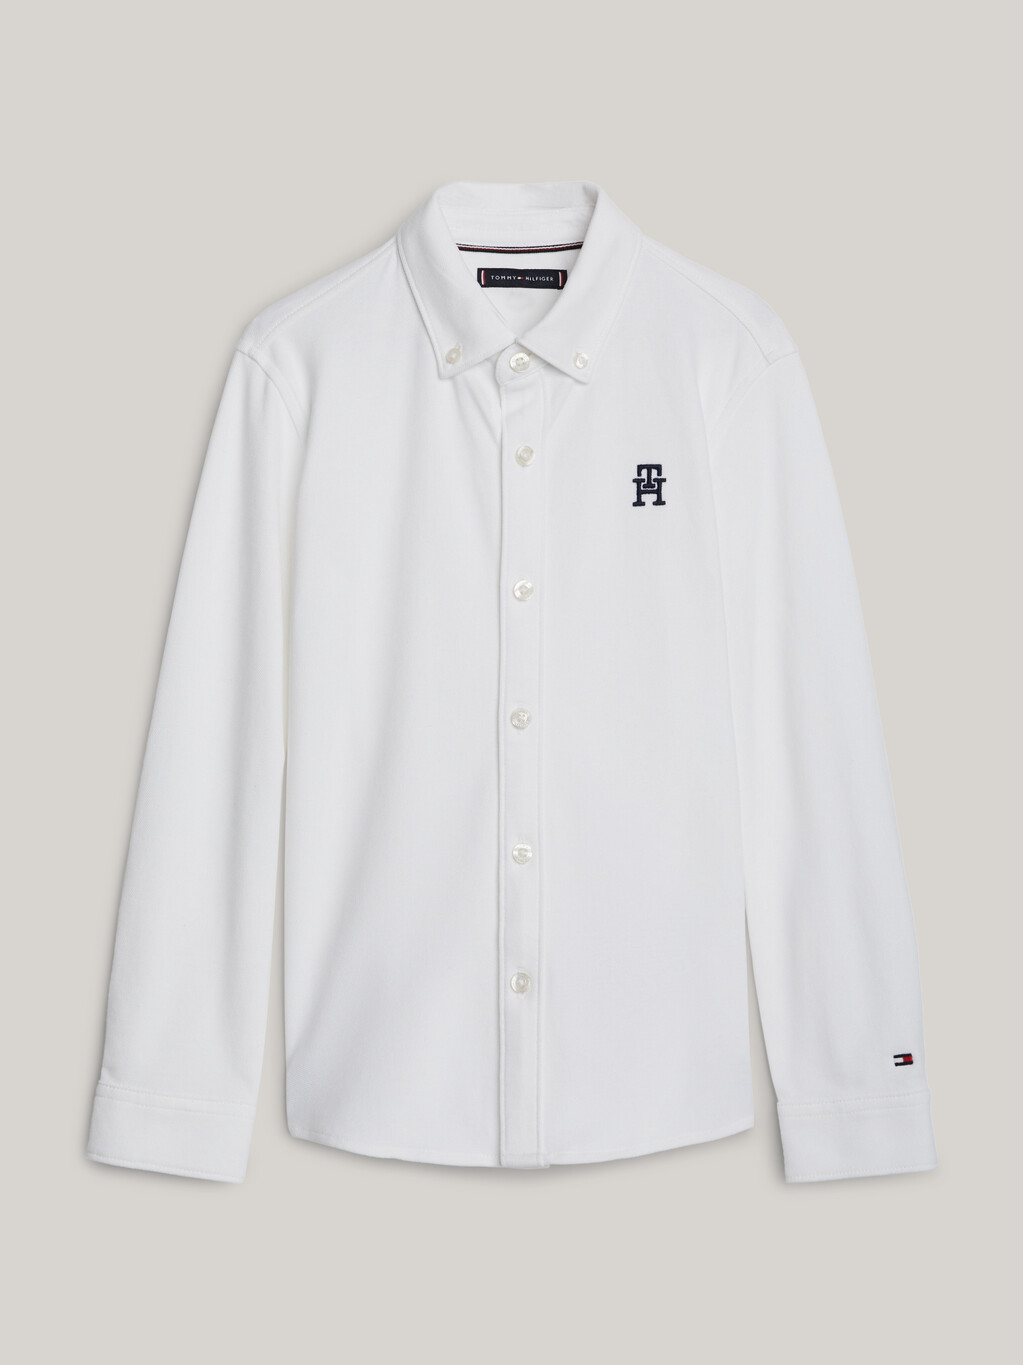 TH Monogram Pique Regular Shirt, White, hi-res